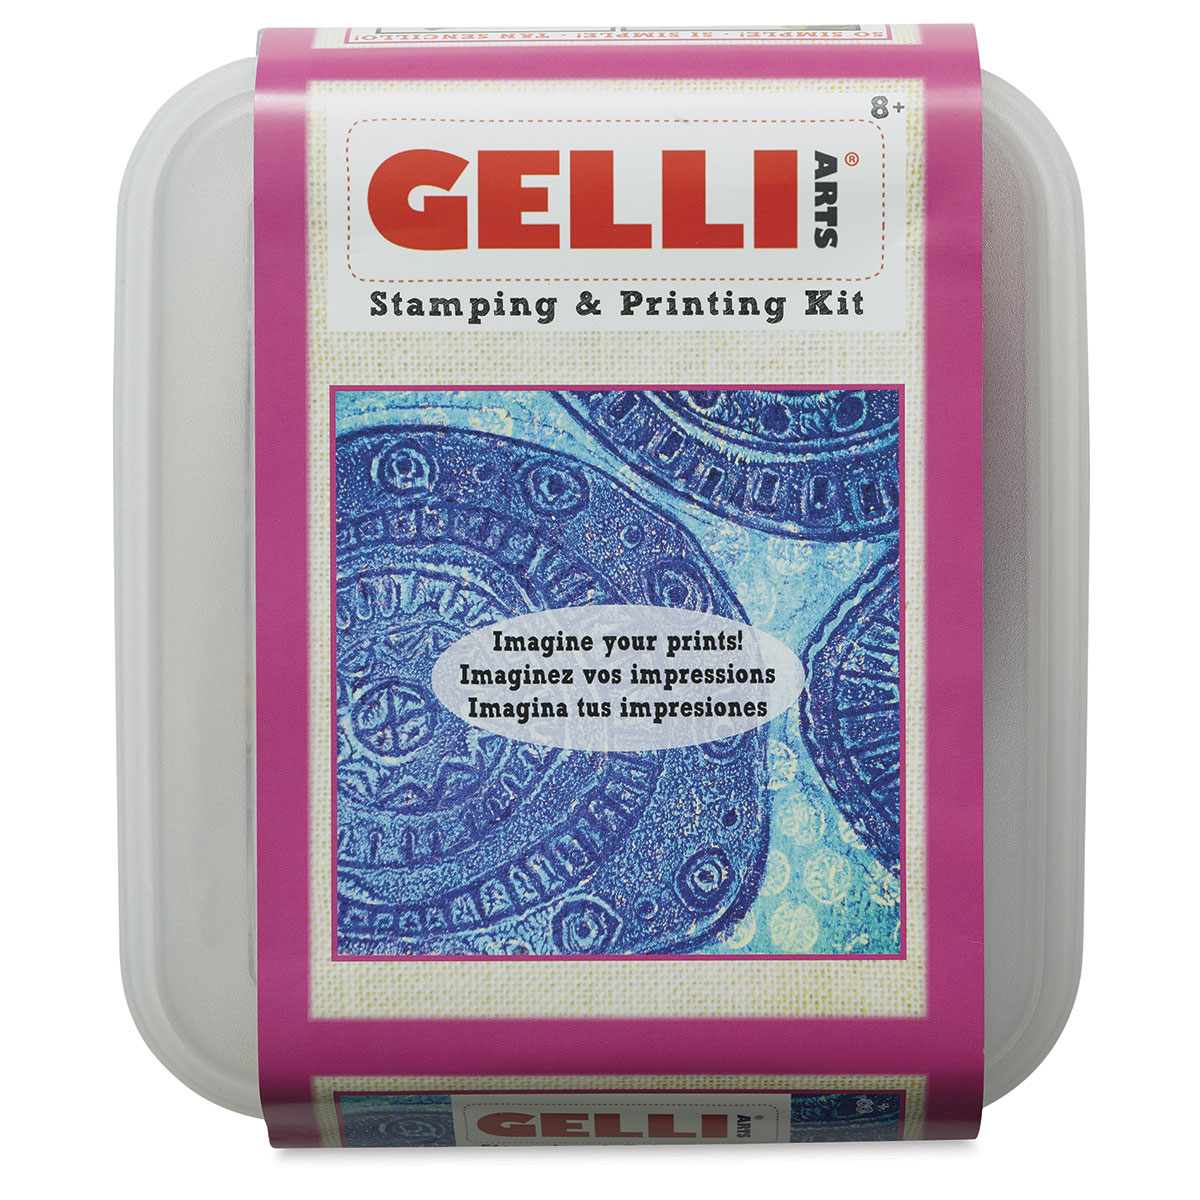 Gelli Arts Gel Printing Plate Joyful Journal Kit